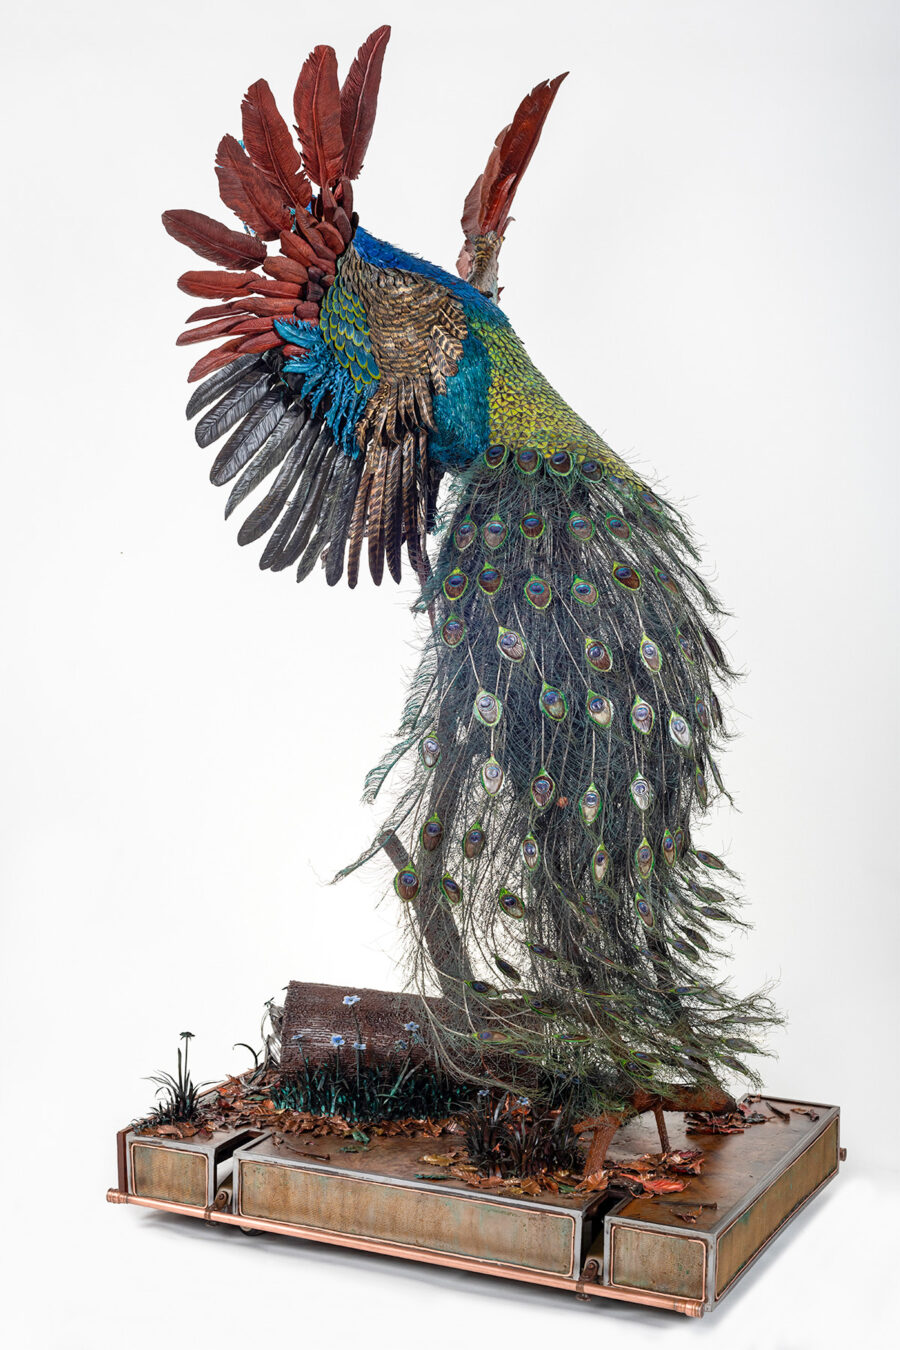 Peacock Sculpture by Cindy Chinn - 15